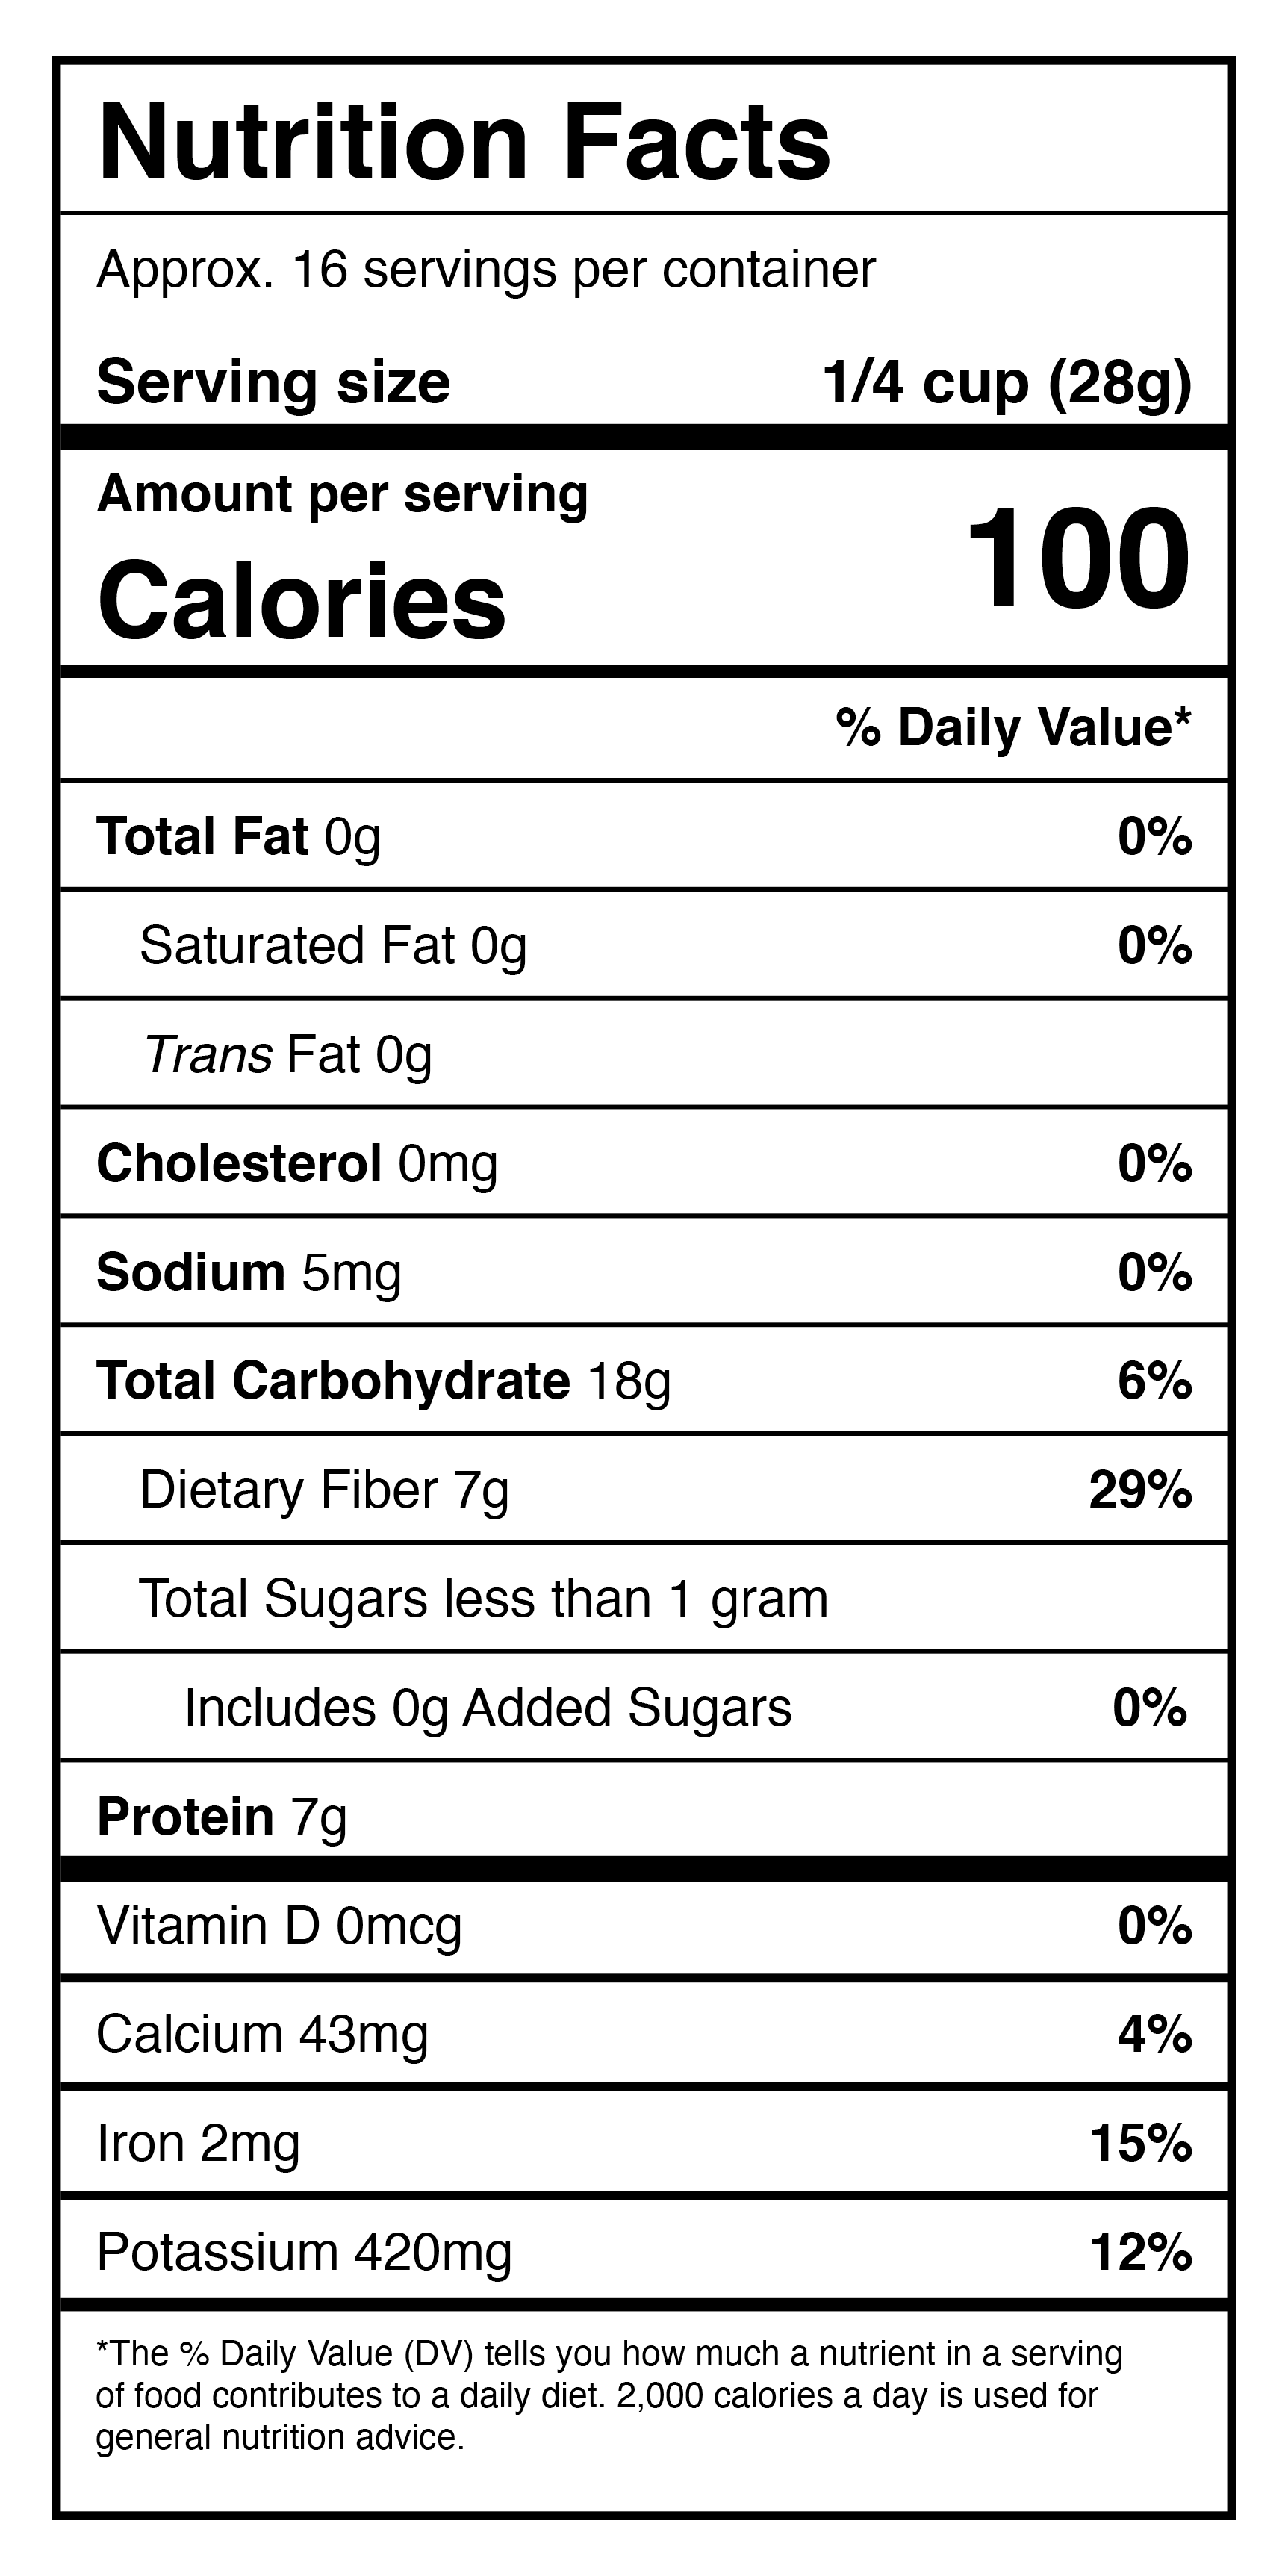 A protein powder nutrition label.